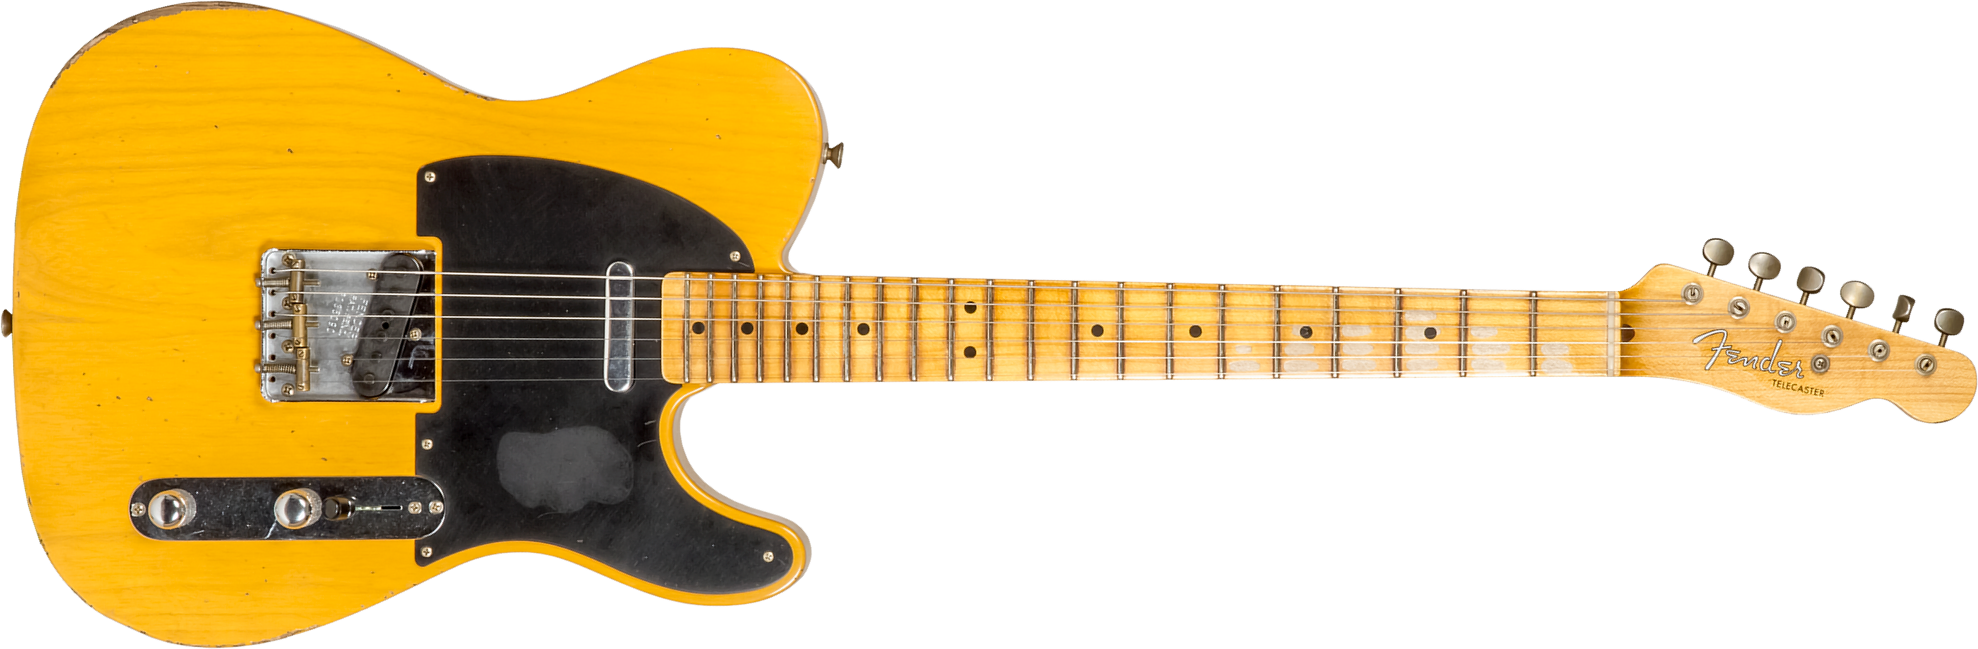 Fender Custom Shop Tele 1952 2s Ht Mn #r135090 - Relic Aged Butterscotch Blonde - E-Gitarre in Teleform - Main picture